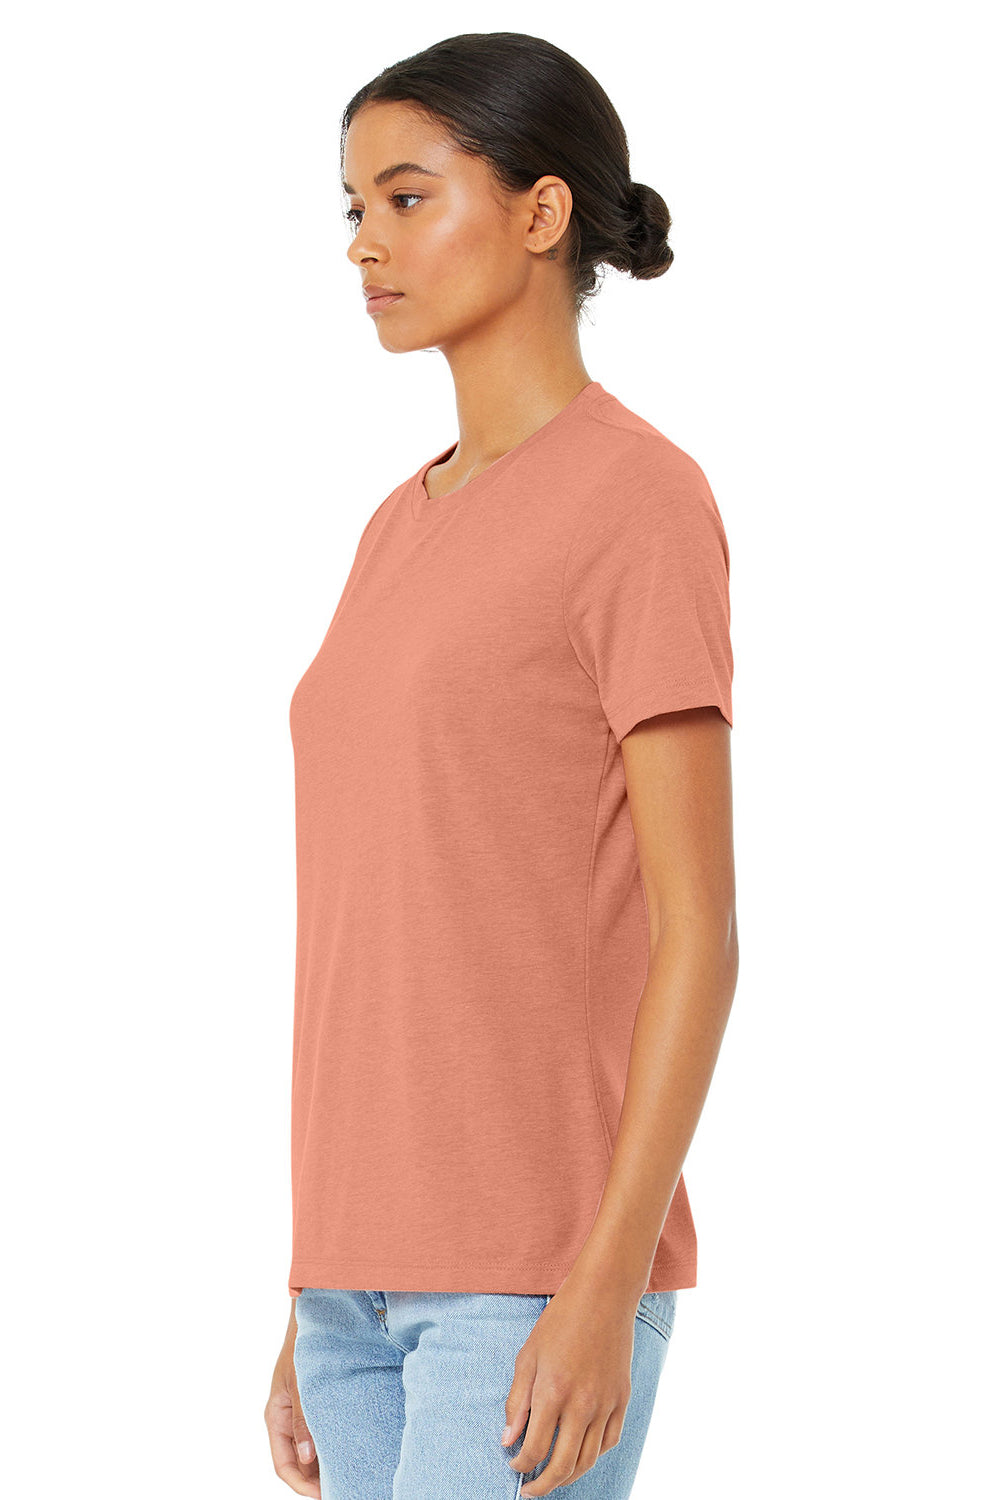 Bella + Canvas BC6400CVC/6400CVC Womens CVC Short Sleeve Crewneck T-Shirt Heather Sunset Orange Model 3Q